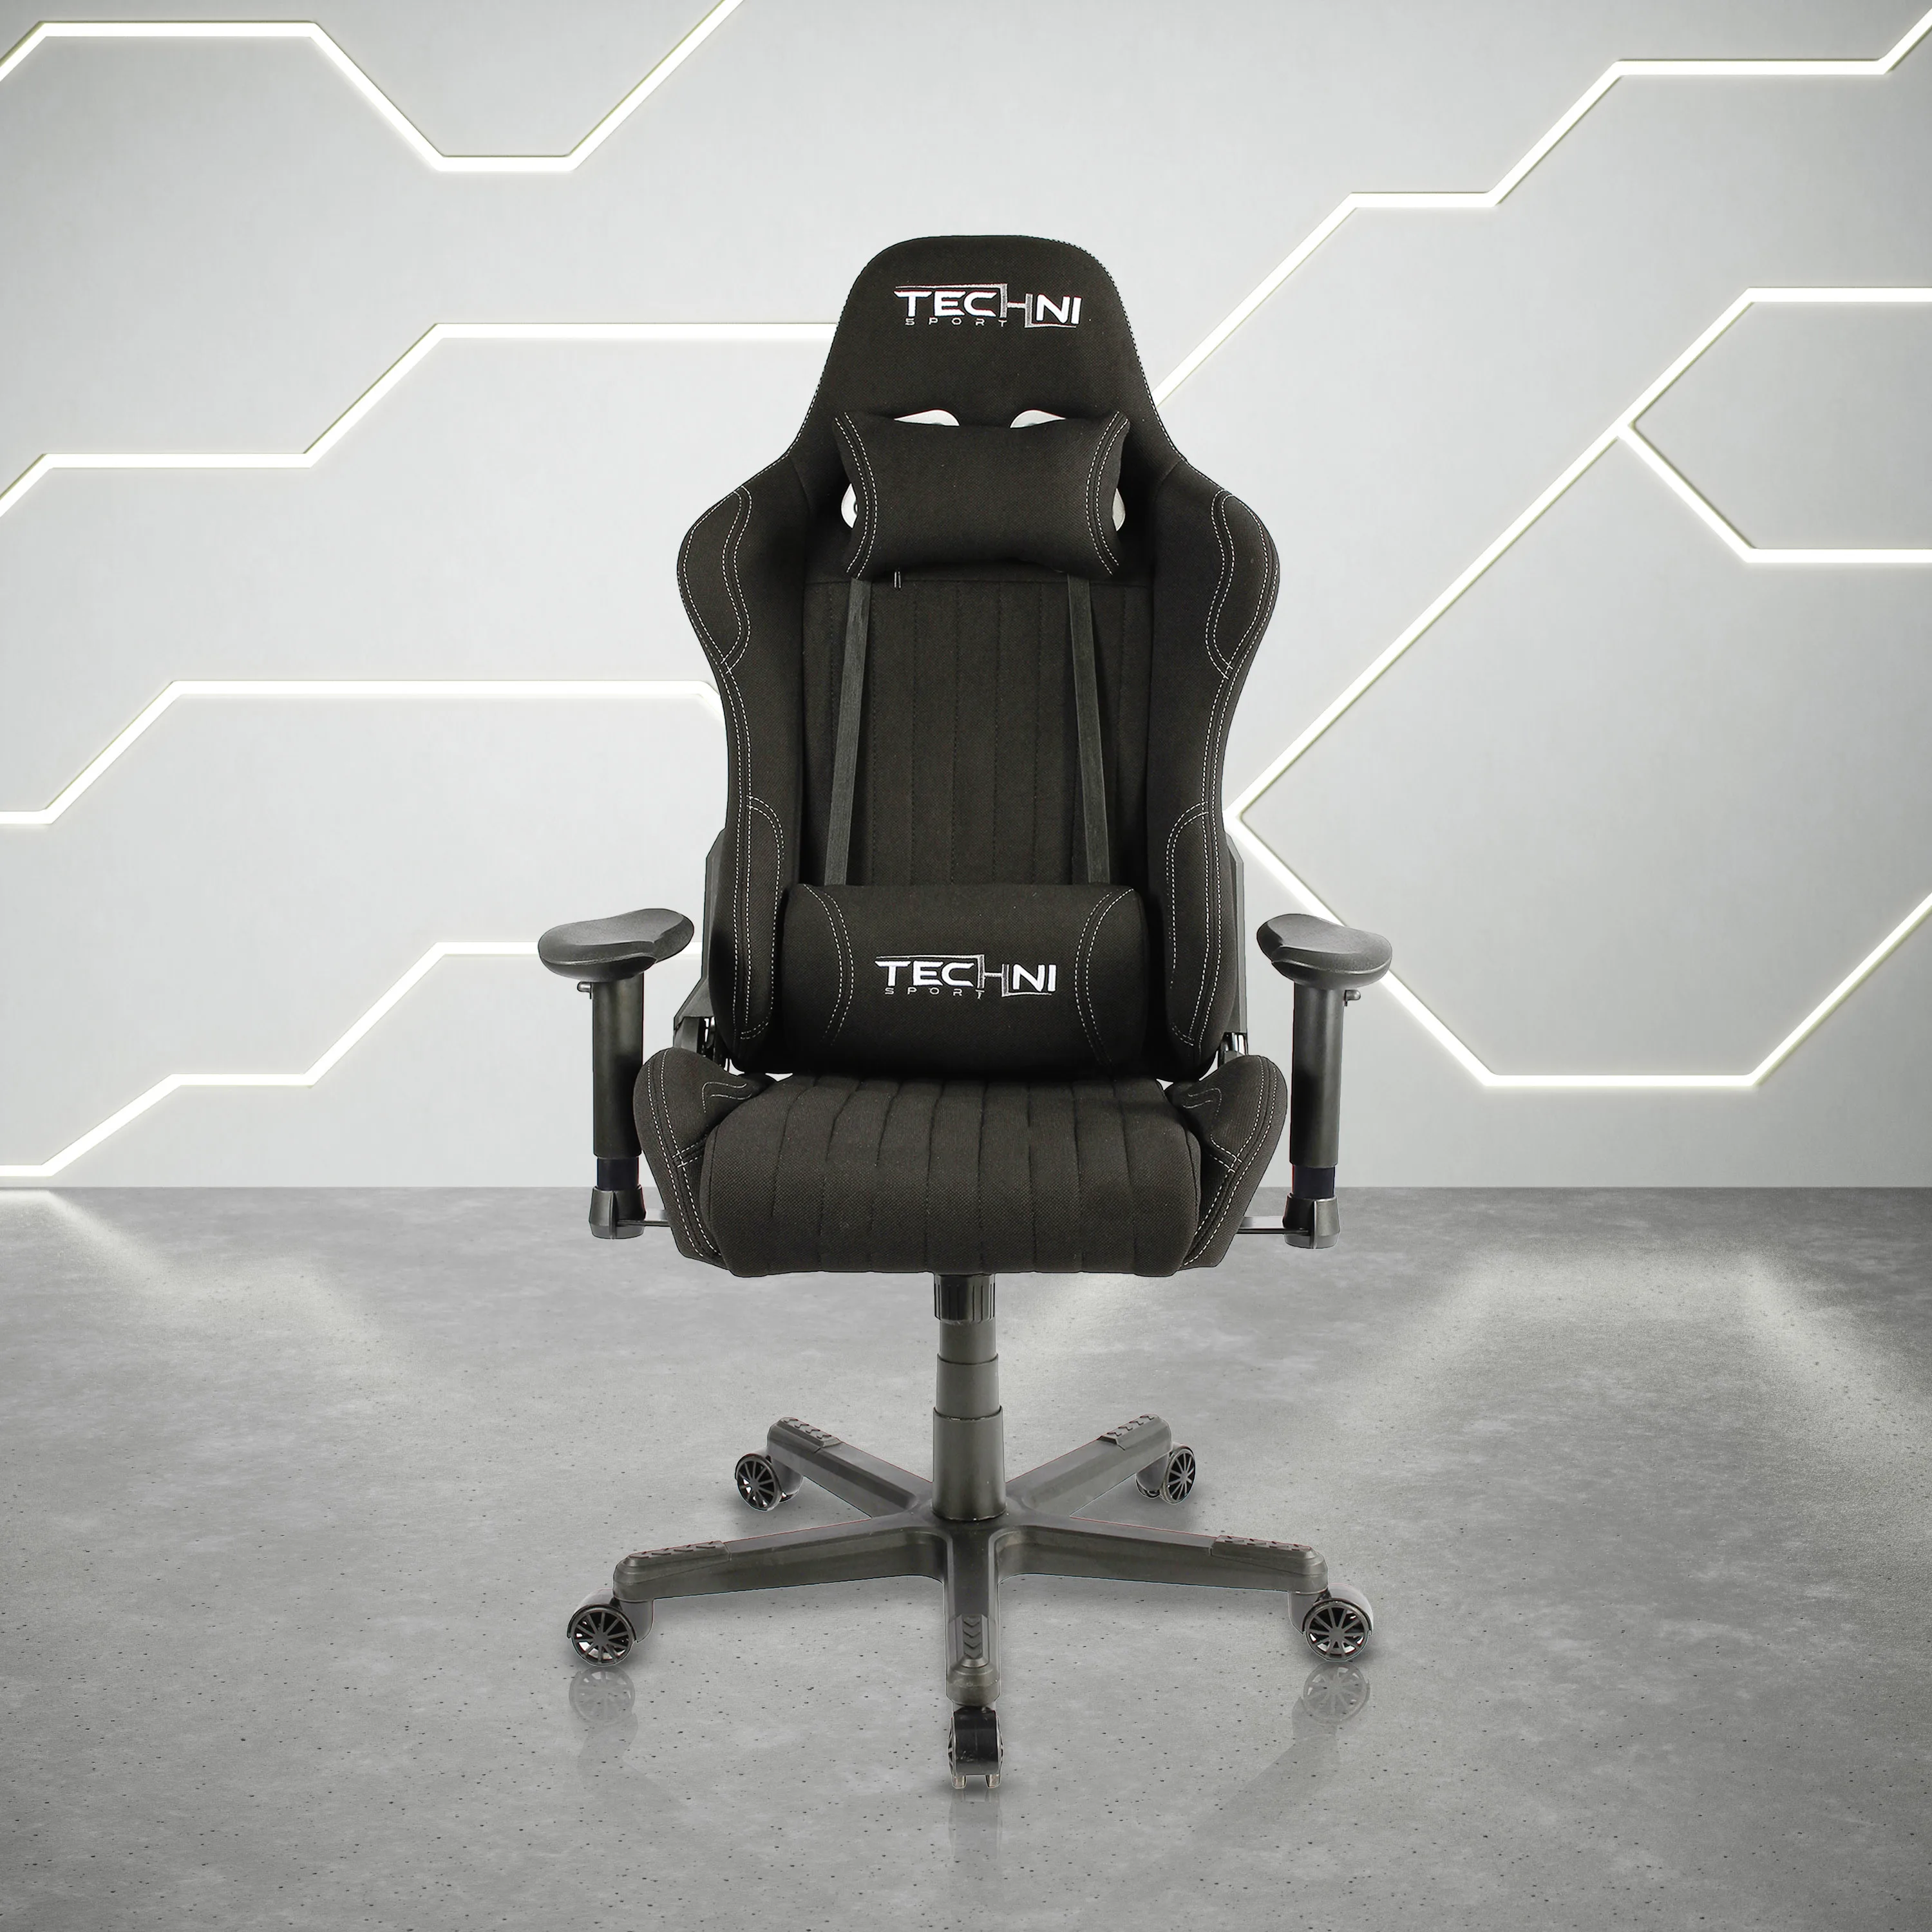 https://ae01.alicdn.com/kf/S4f6c7be74fe74bf1af53c9d7bd11f378P/Sport-TS-F44-Fabric-Ergonomic-High-Back-Racer-Style-PC-Gaming-Chair-Black-Office-Chairs.jpg